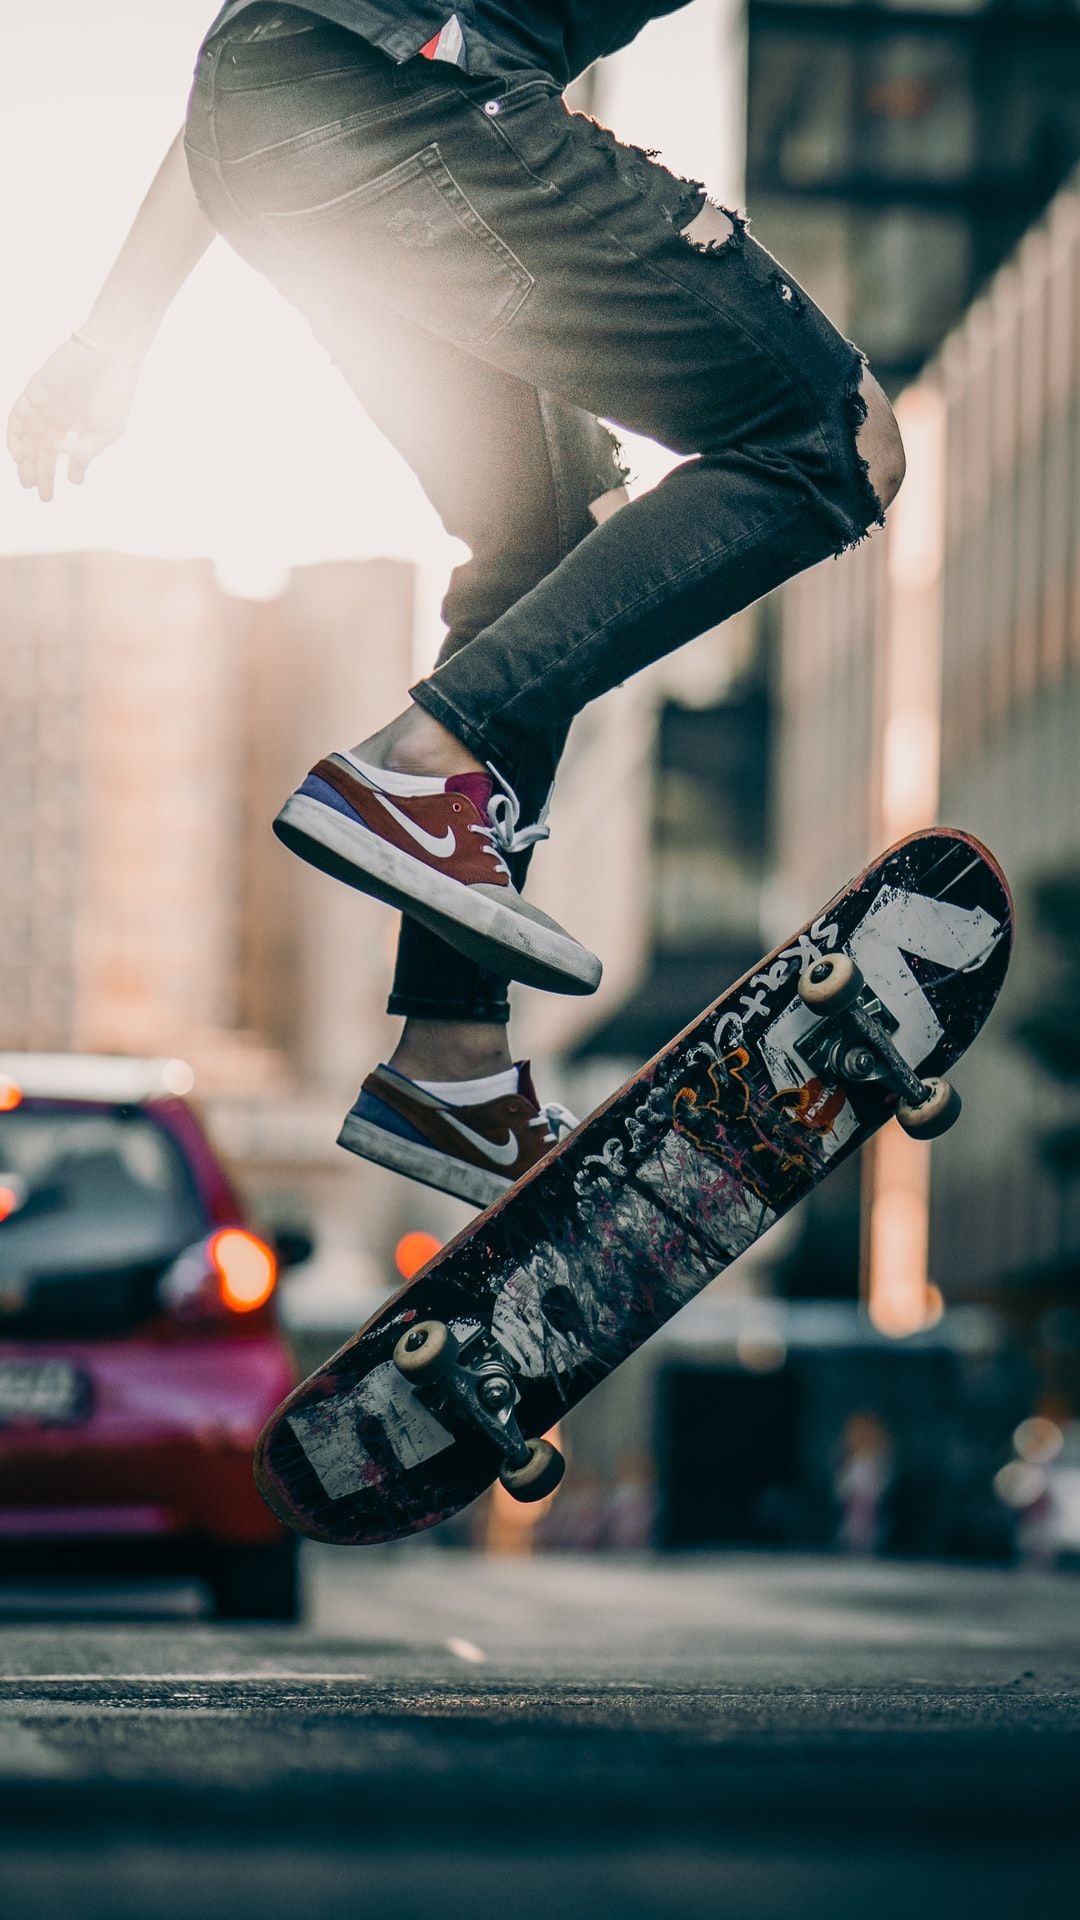 Skateboarding: Exciting street performance involving skateboard tricks and aerial maneuvers. 1080x1920 Full HD Wallpaper.